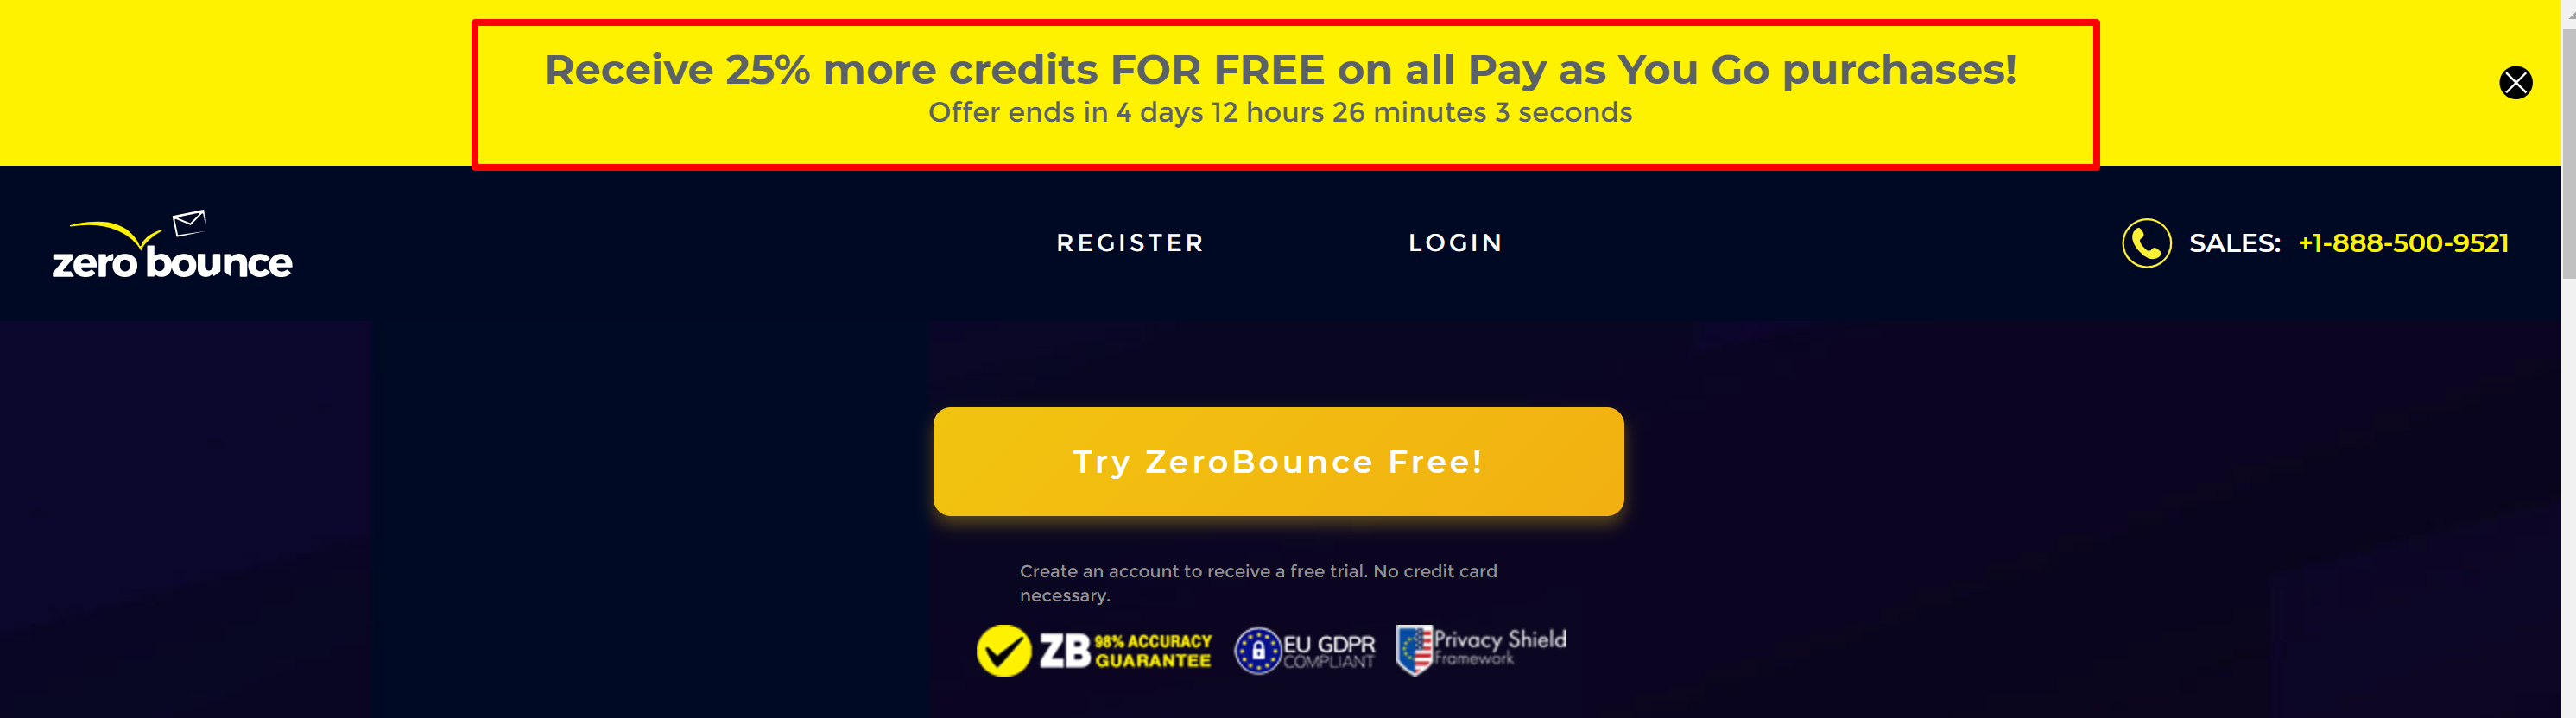 ZeroBounce free credits